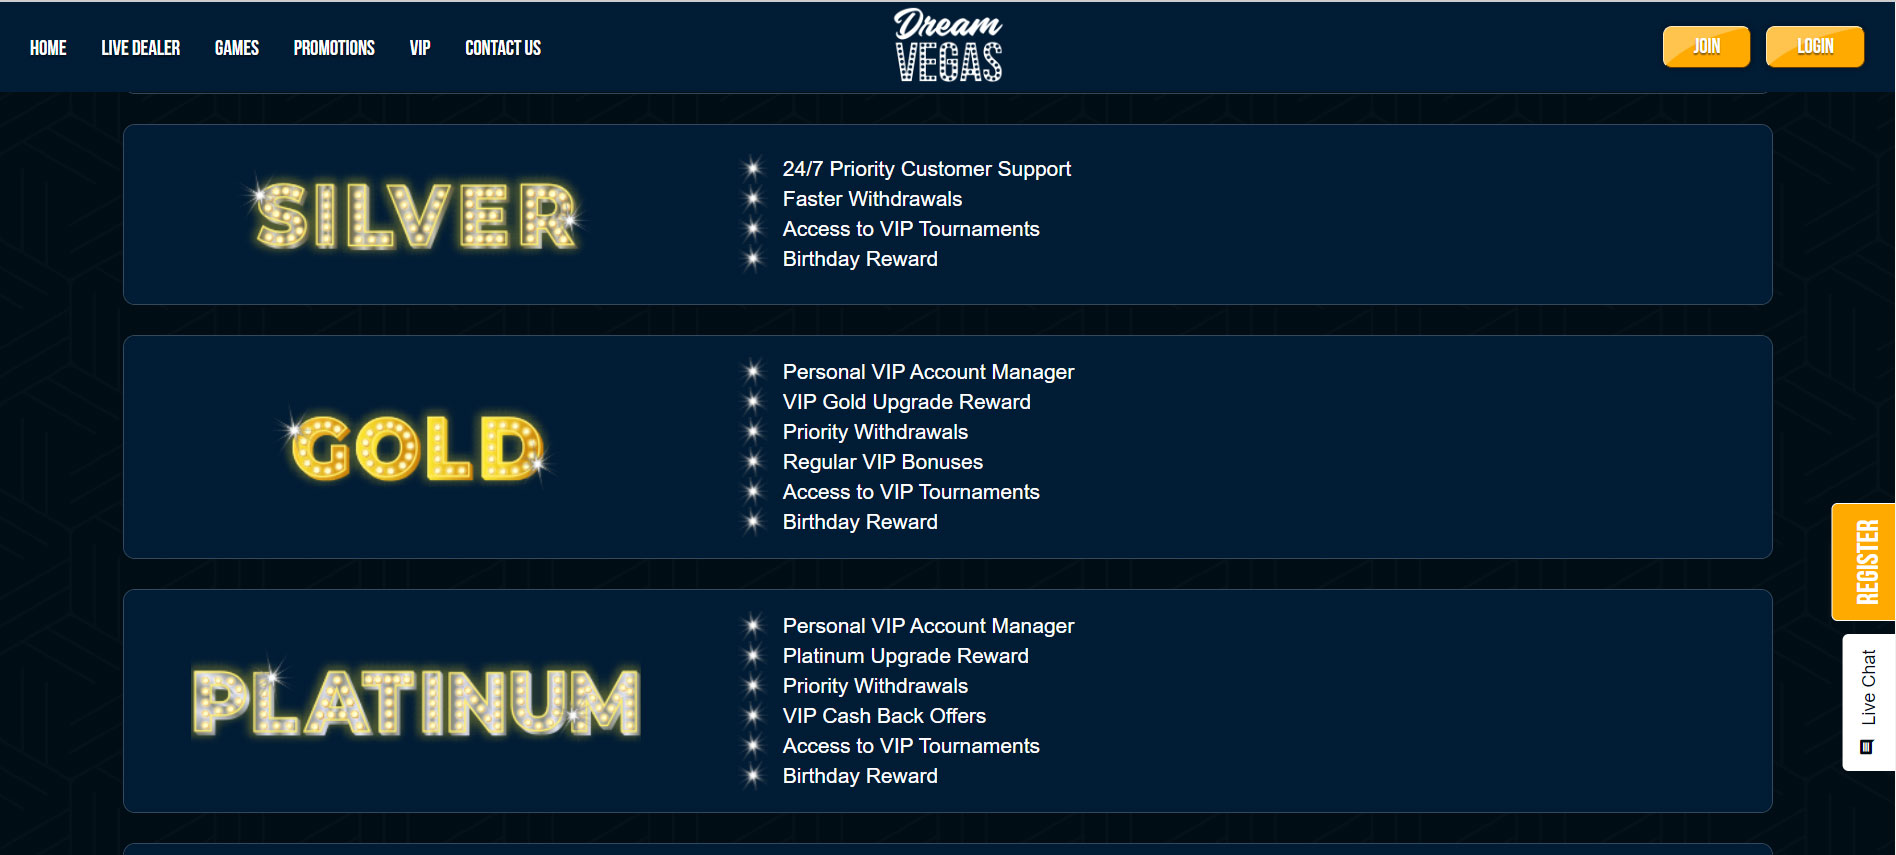 Dream Vegas Casino VIP Program